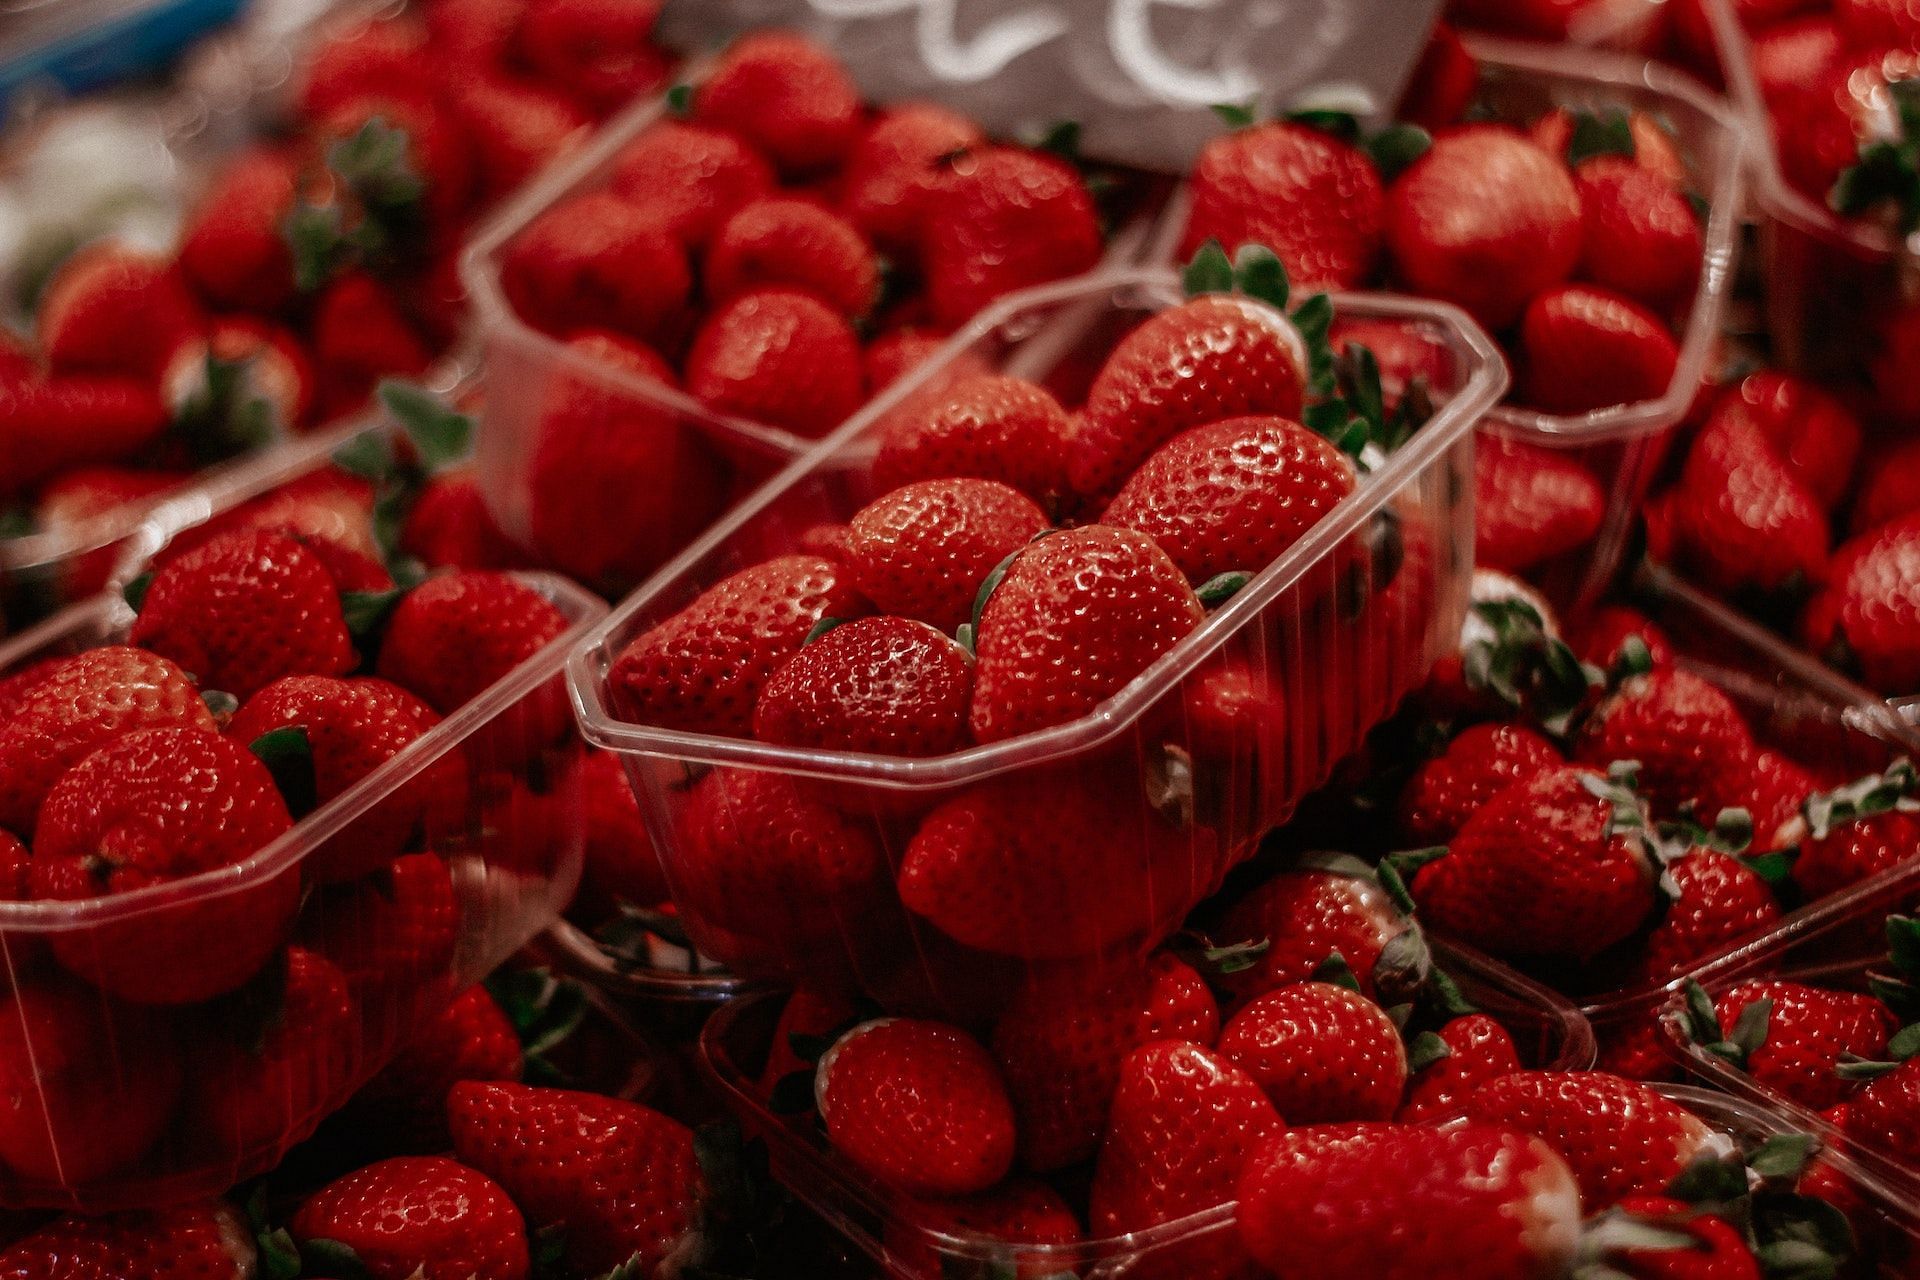 The health benefits of strawberries include preventing cancers. (Photo via Pexels/Anastasiia Petrova)